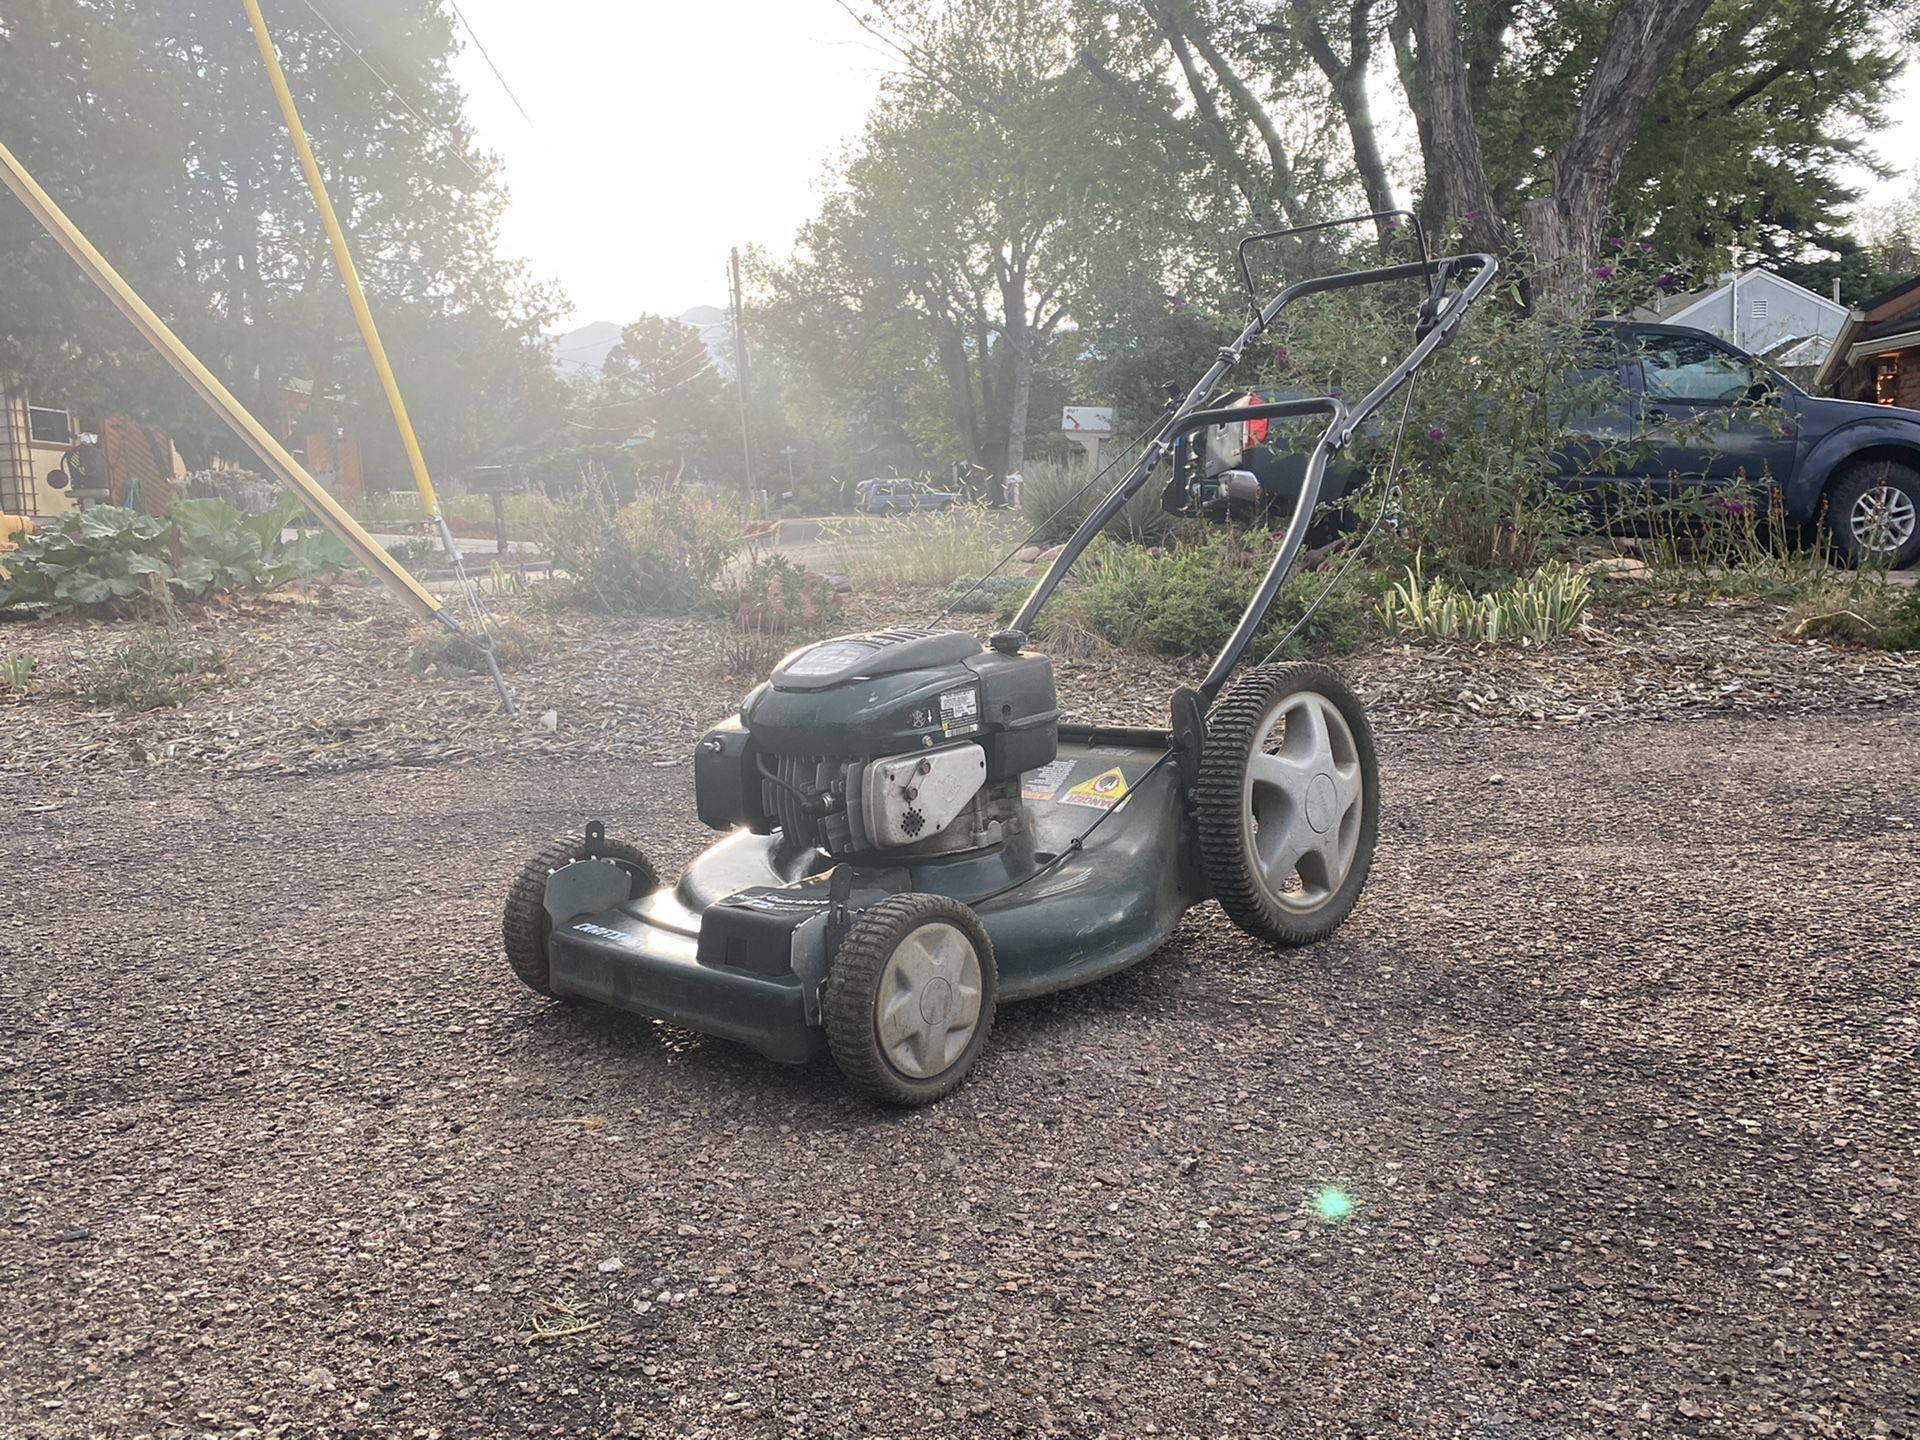 Craftsman 22” 6.75 Lawn Mower